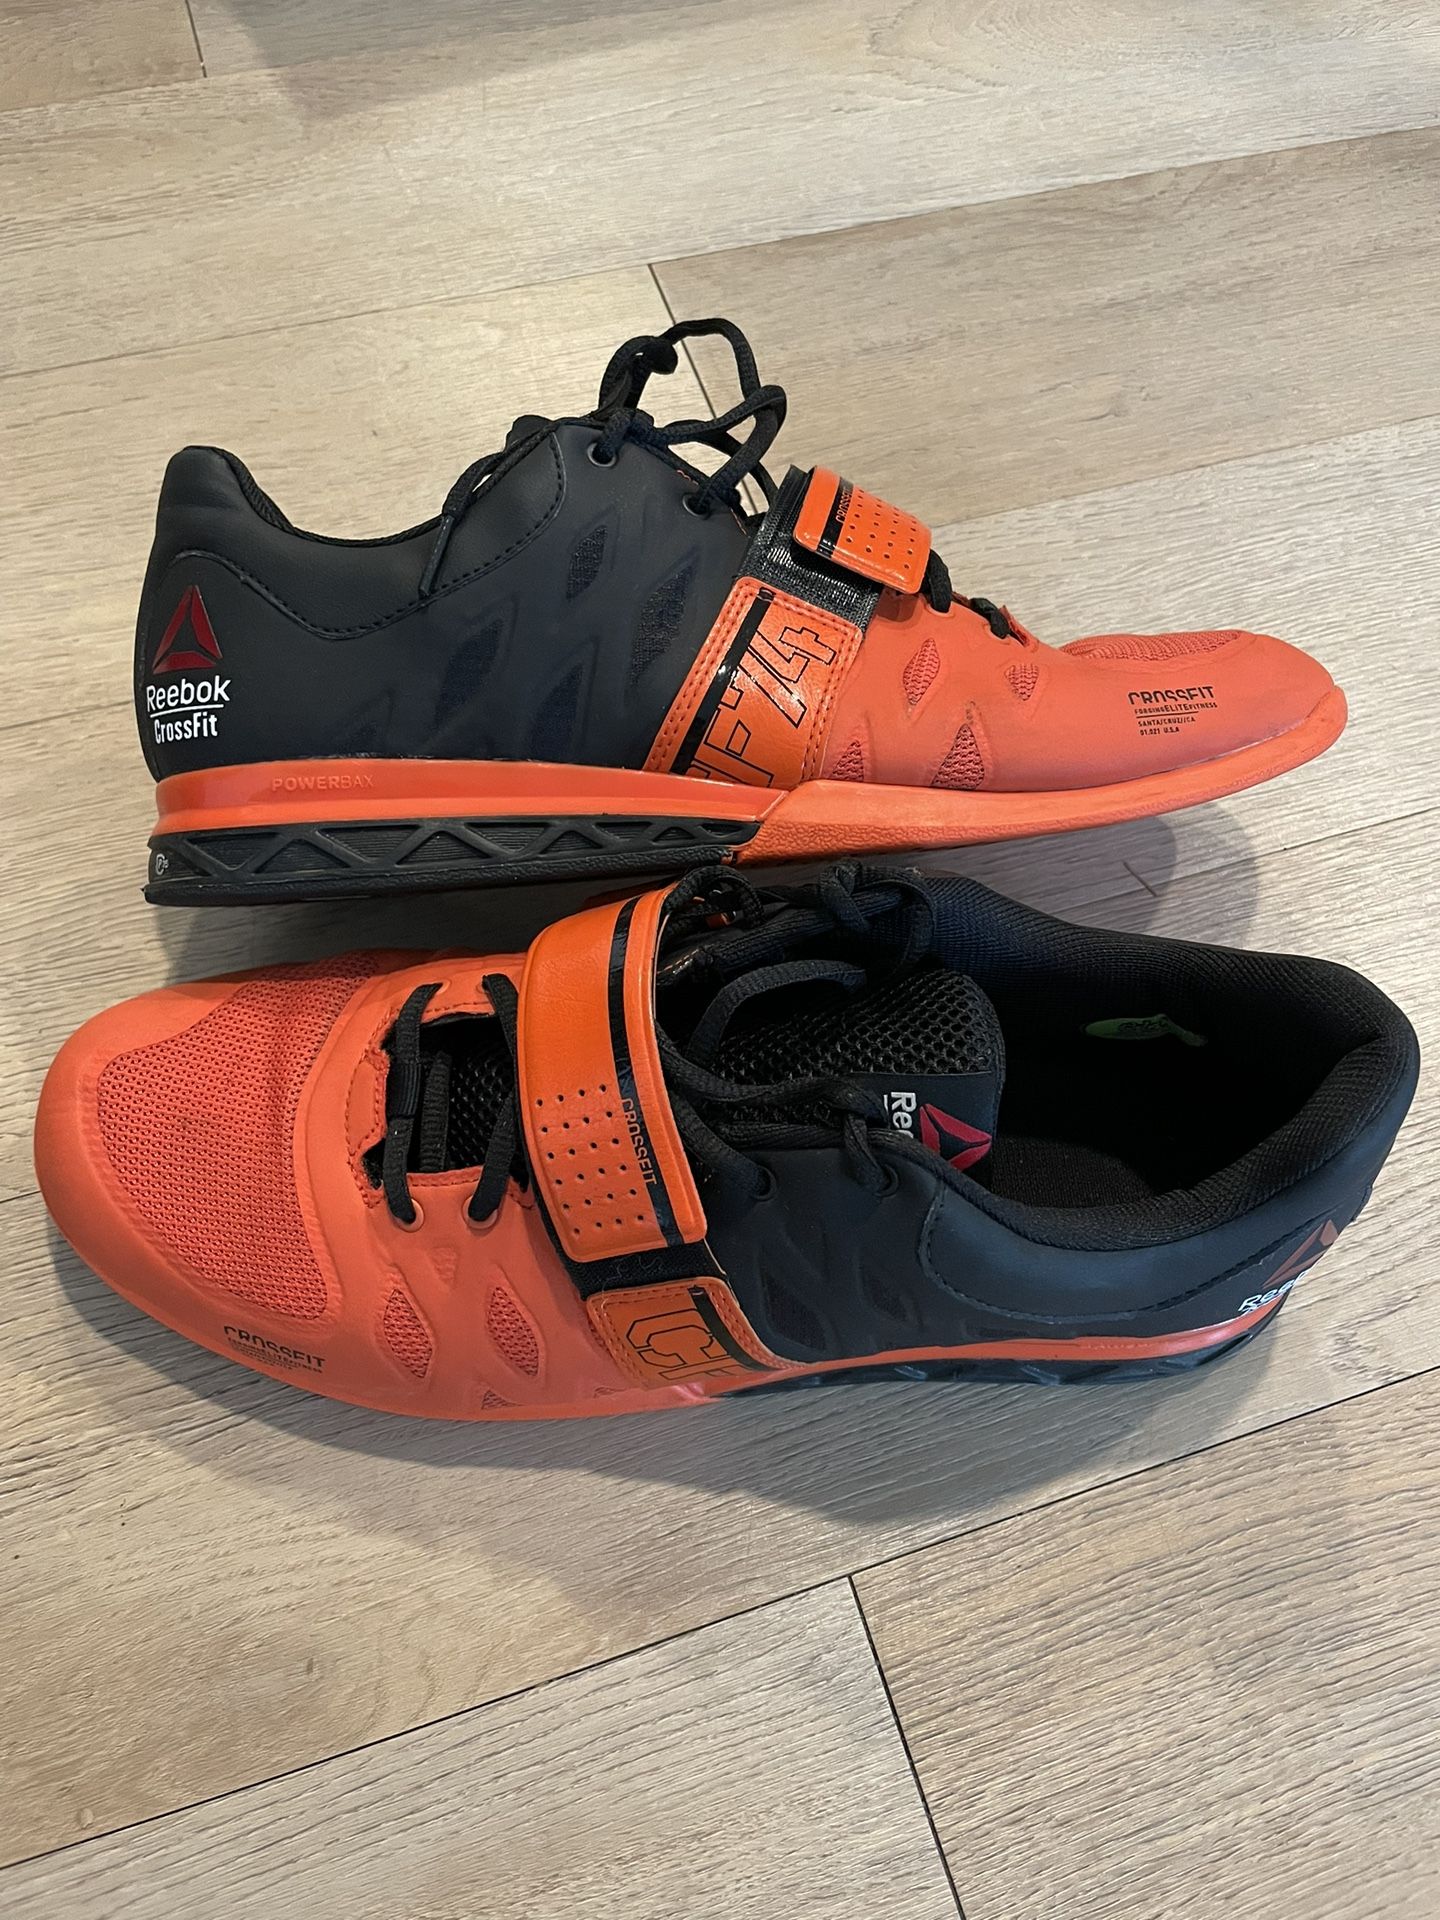 Men’s Reebok CrossFit shoes 12 size